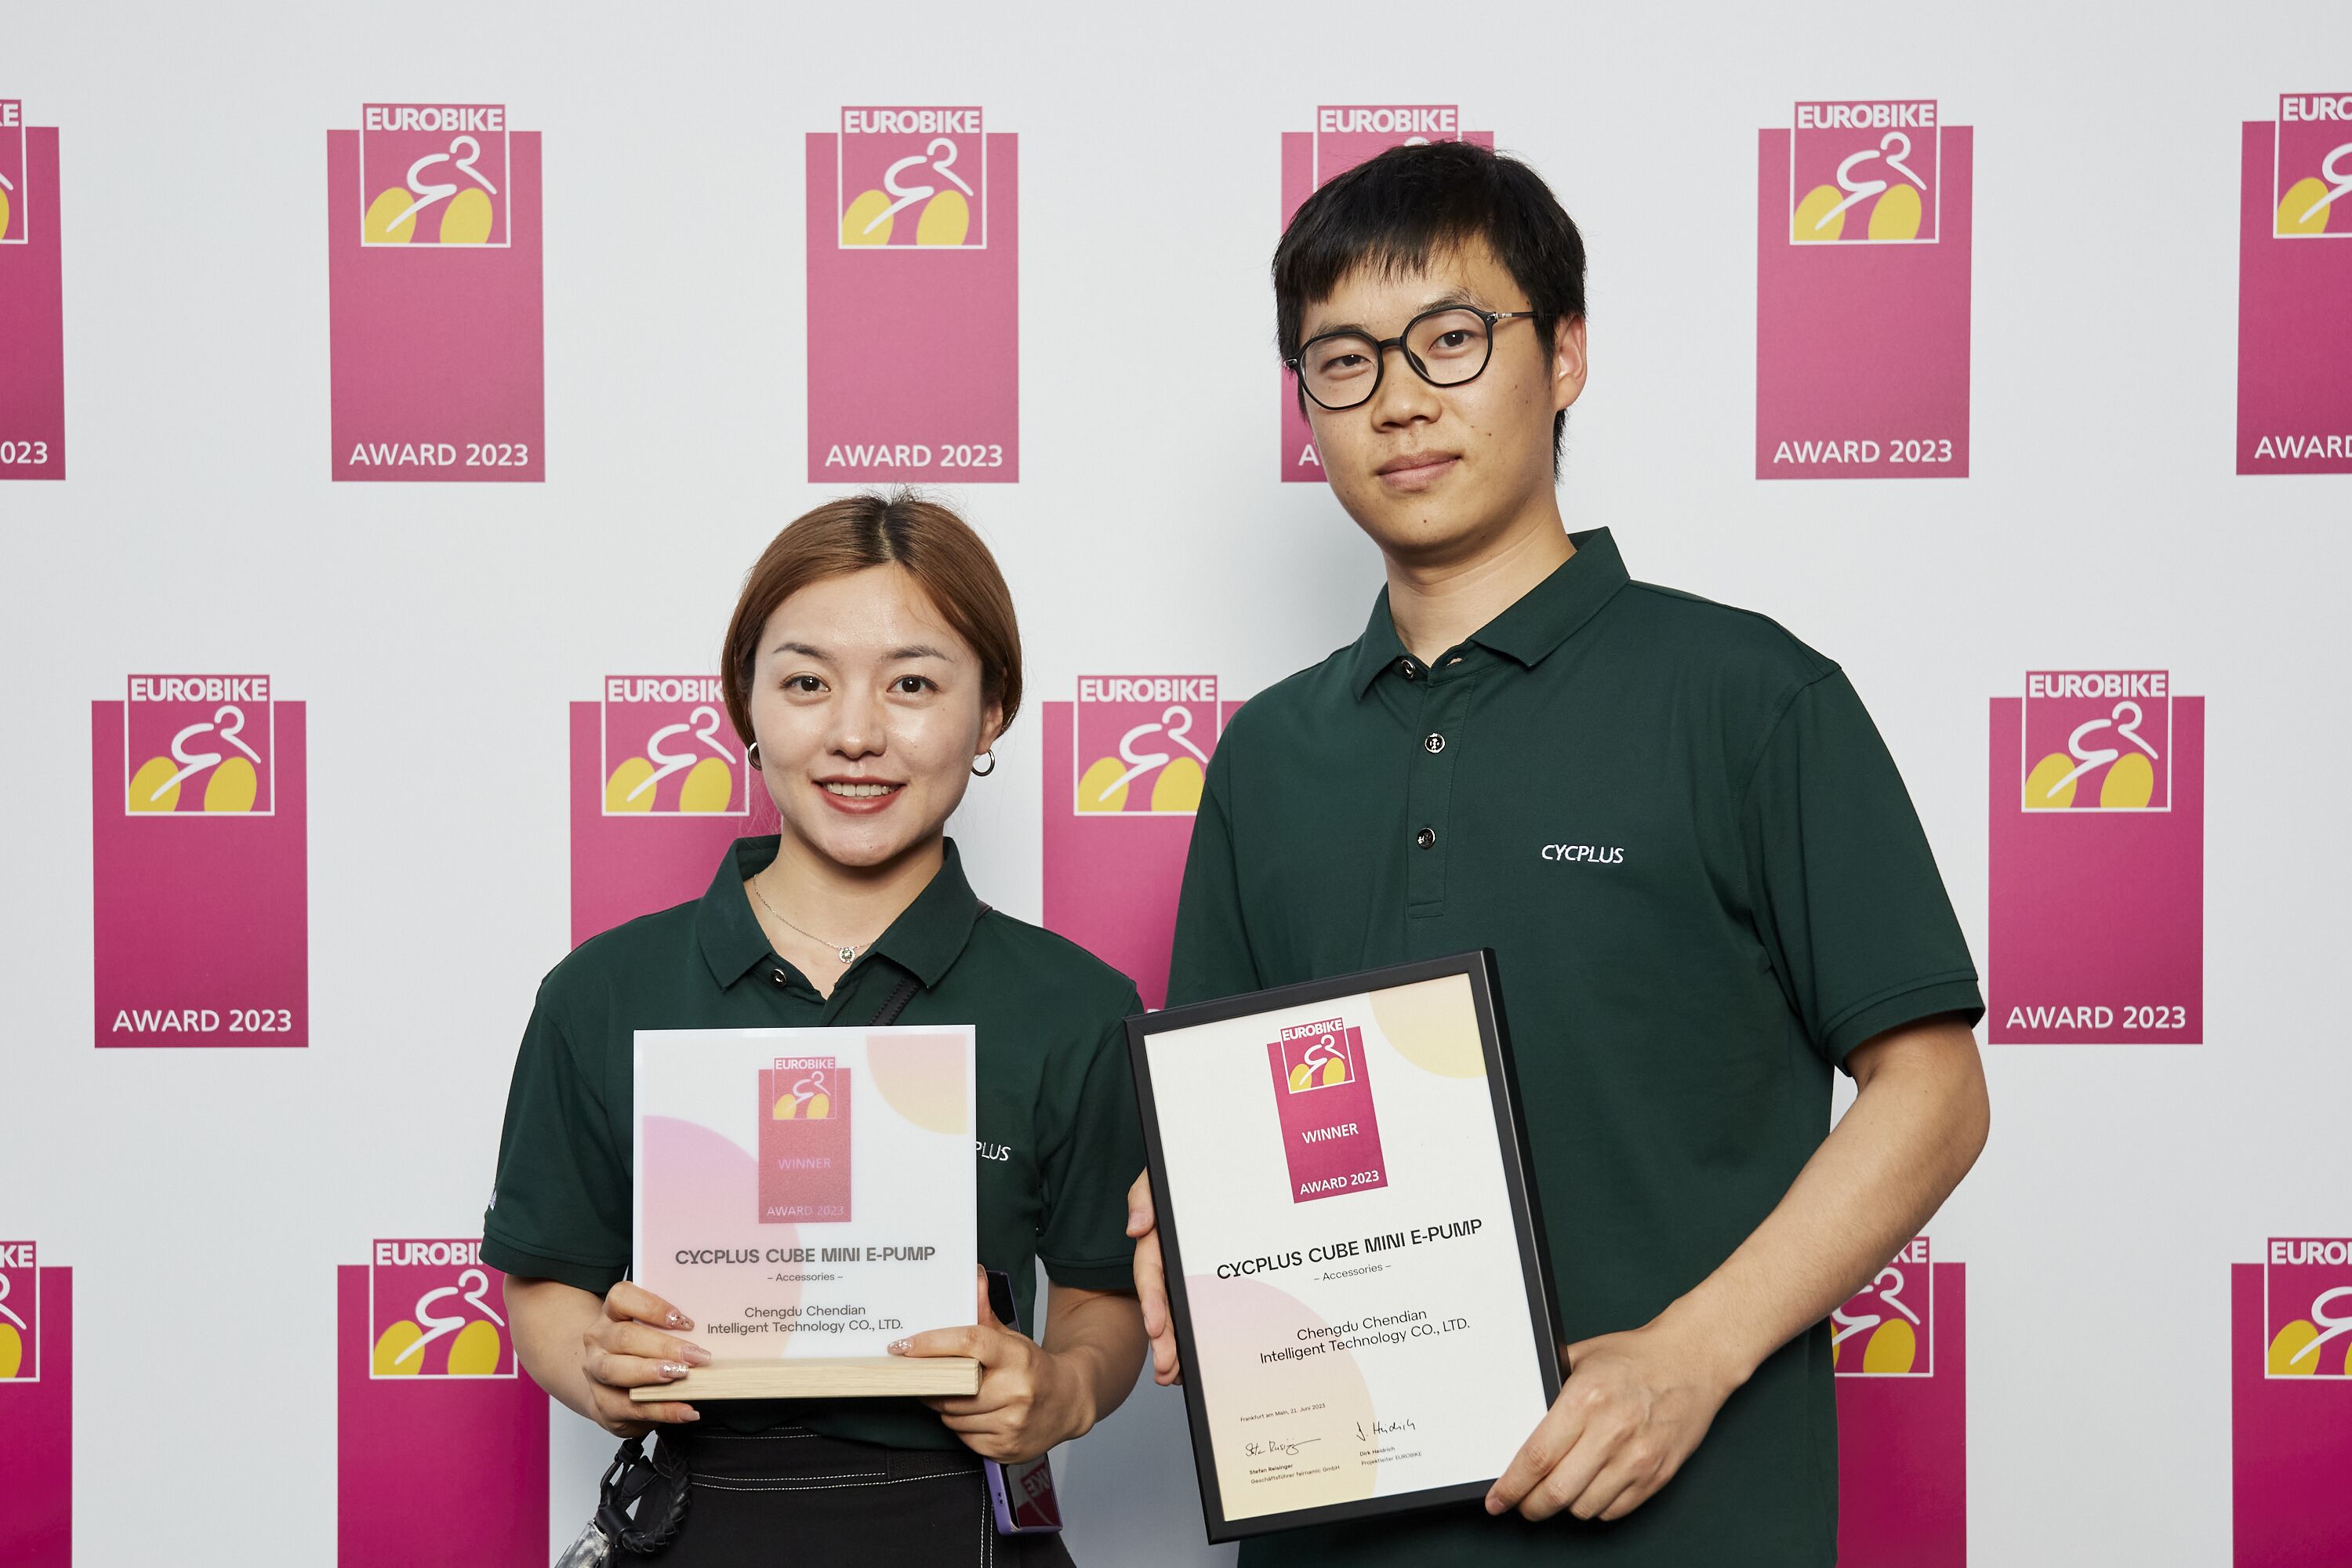 Gewinner Award: Chengdu Chendian; Cycplus Cube Mini E-Pumo